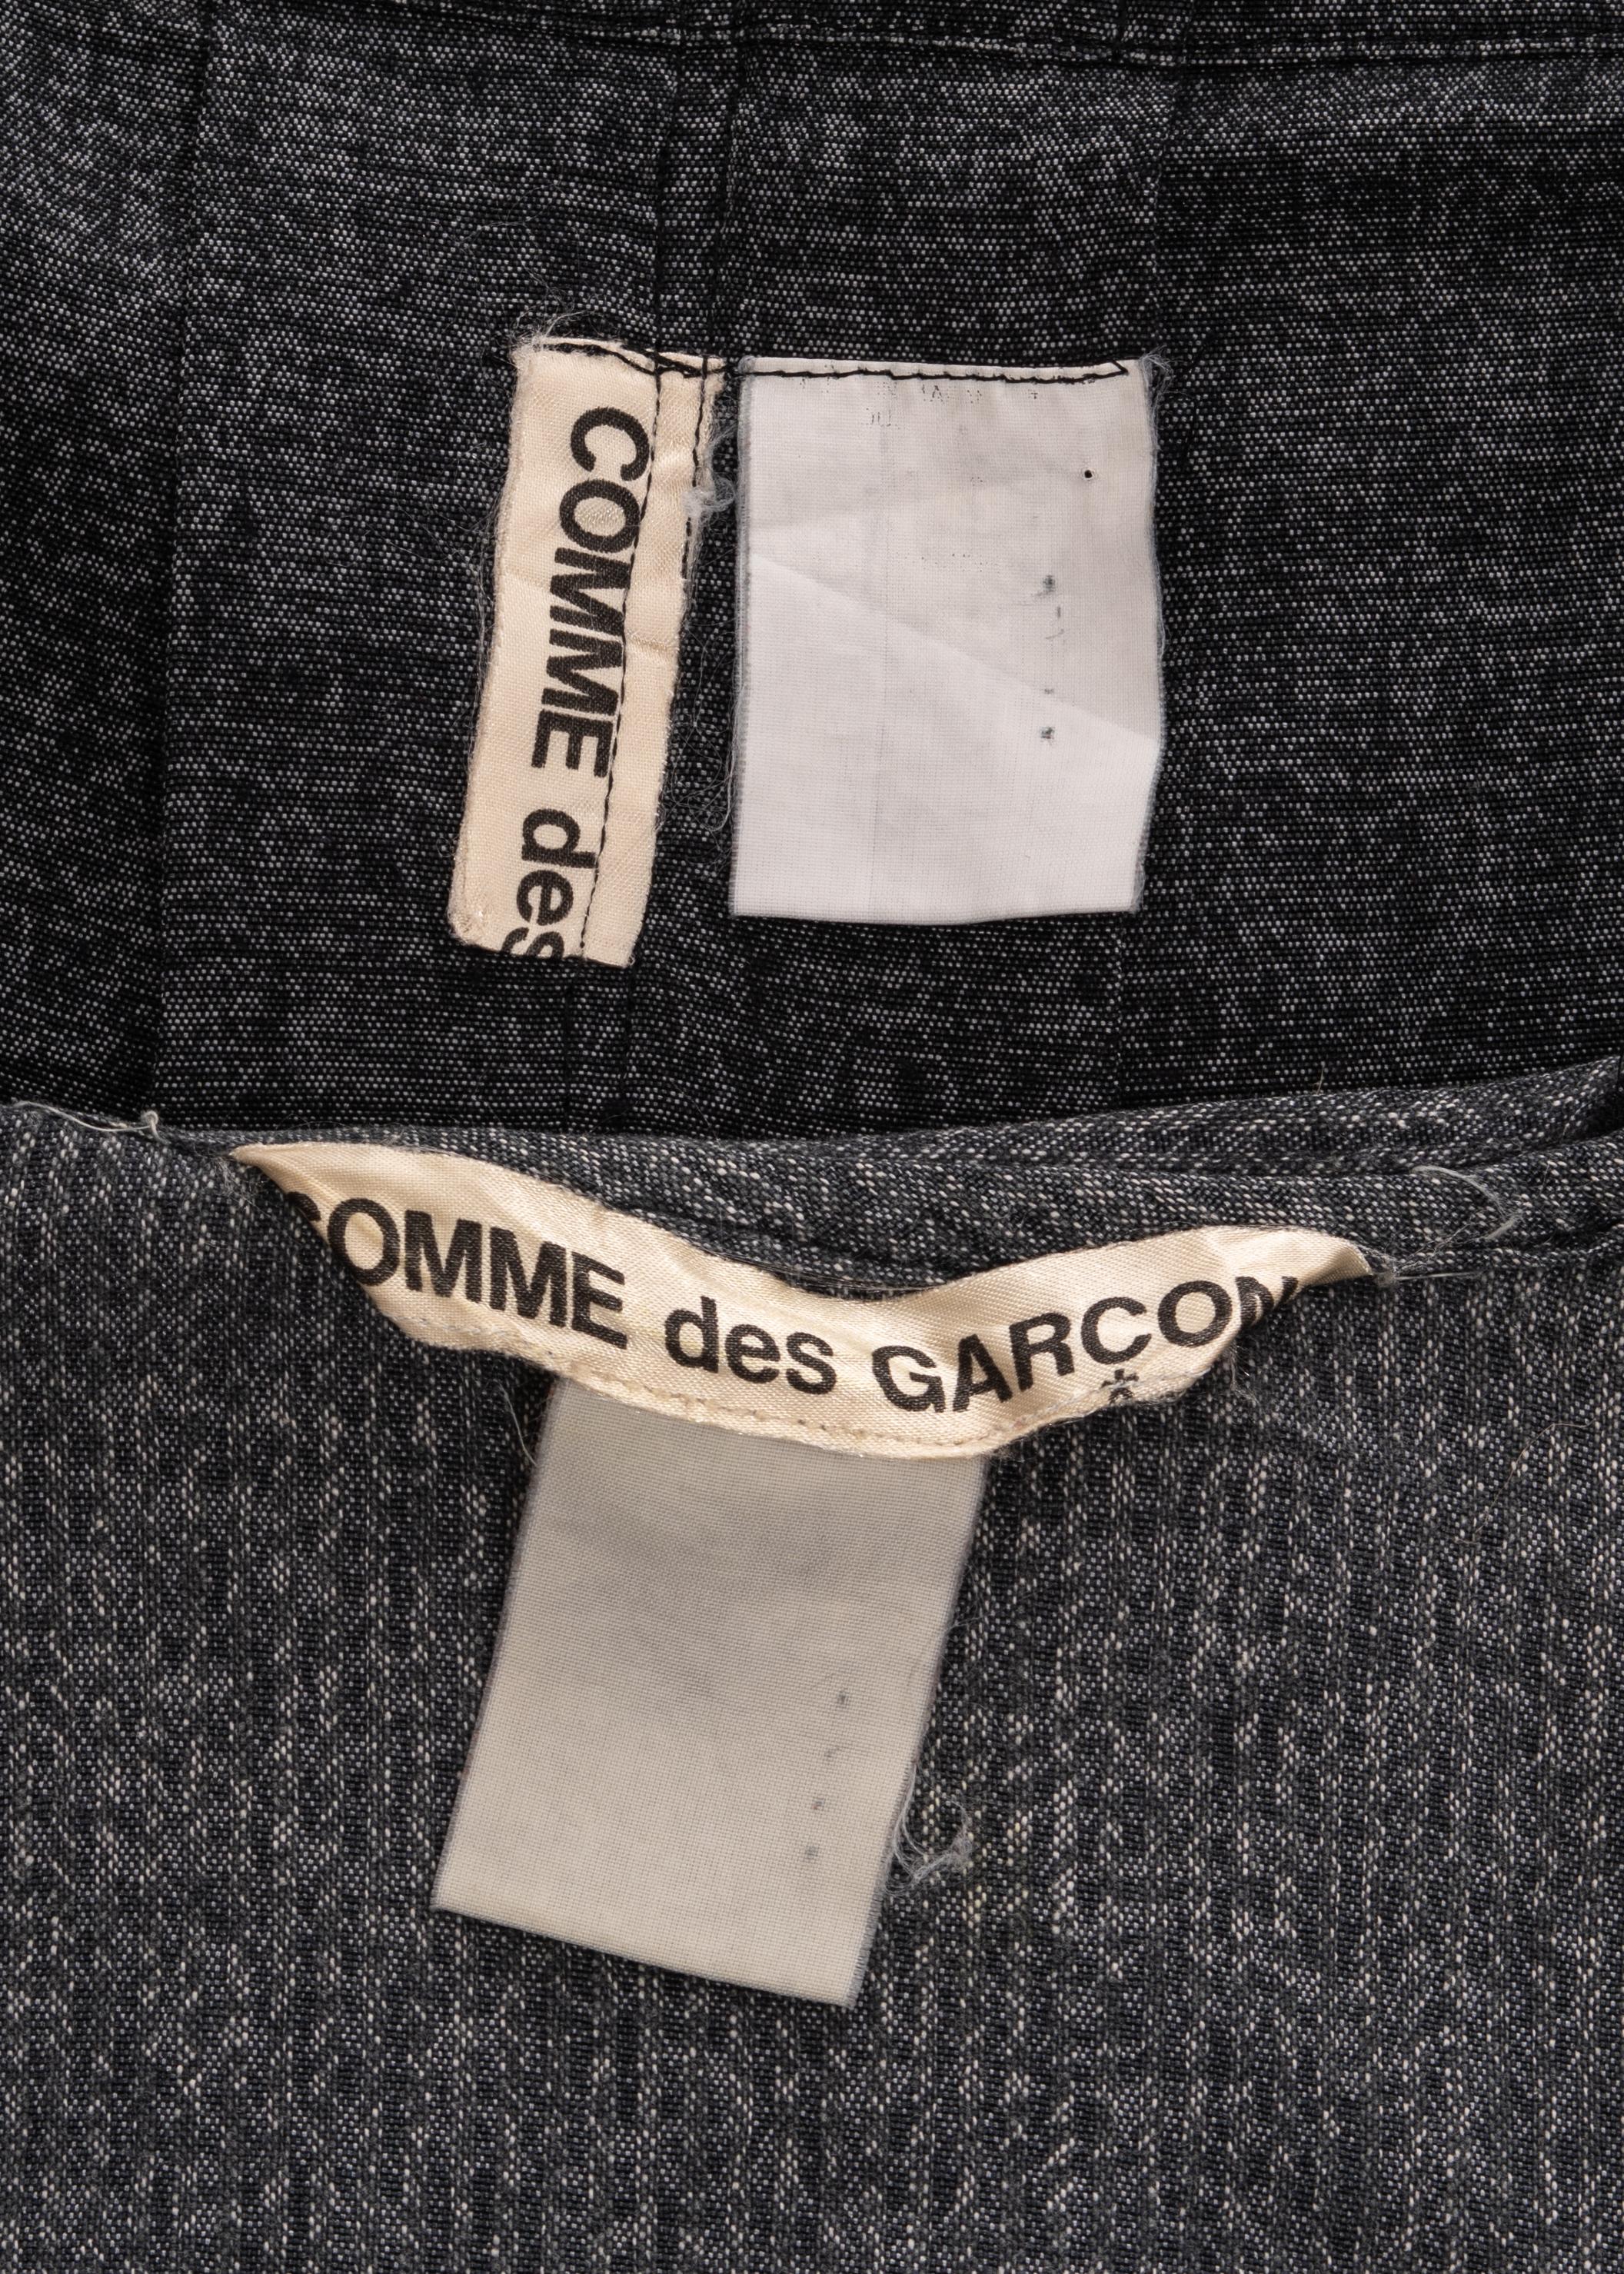 Comme des Garçons grey rayon blouse and wrap skirt set, 1984 2